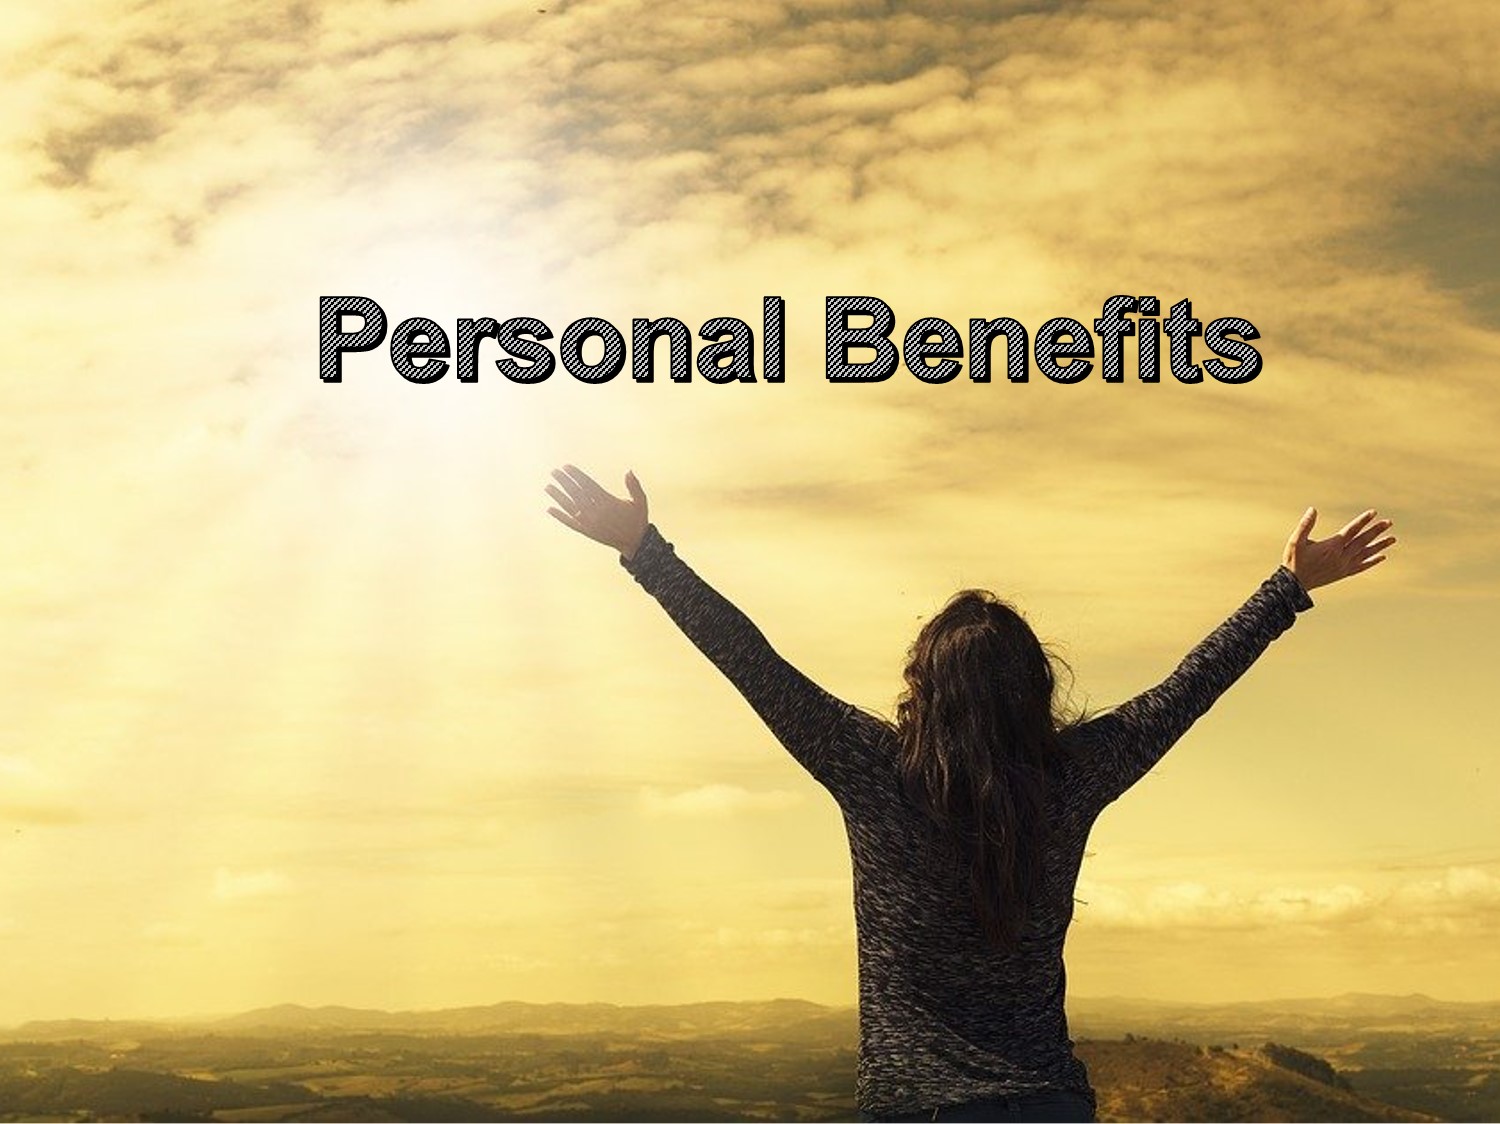 dcc-image-personal-benefits-2019.jpg